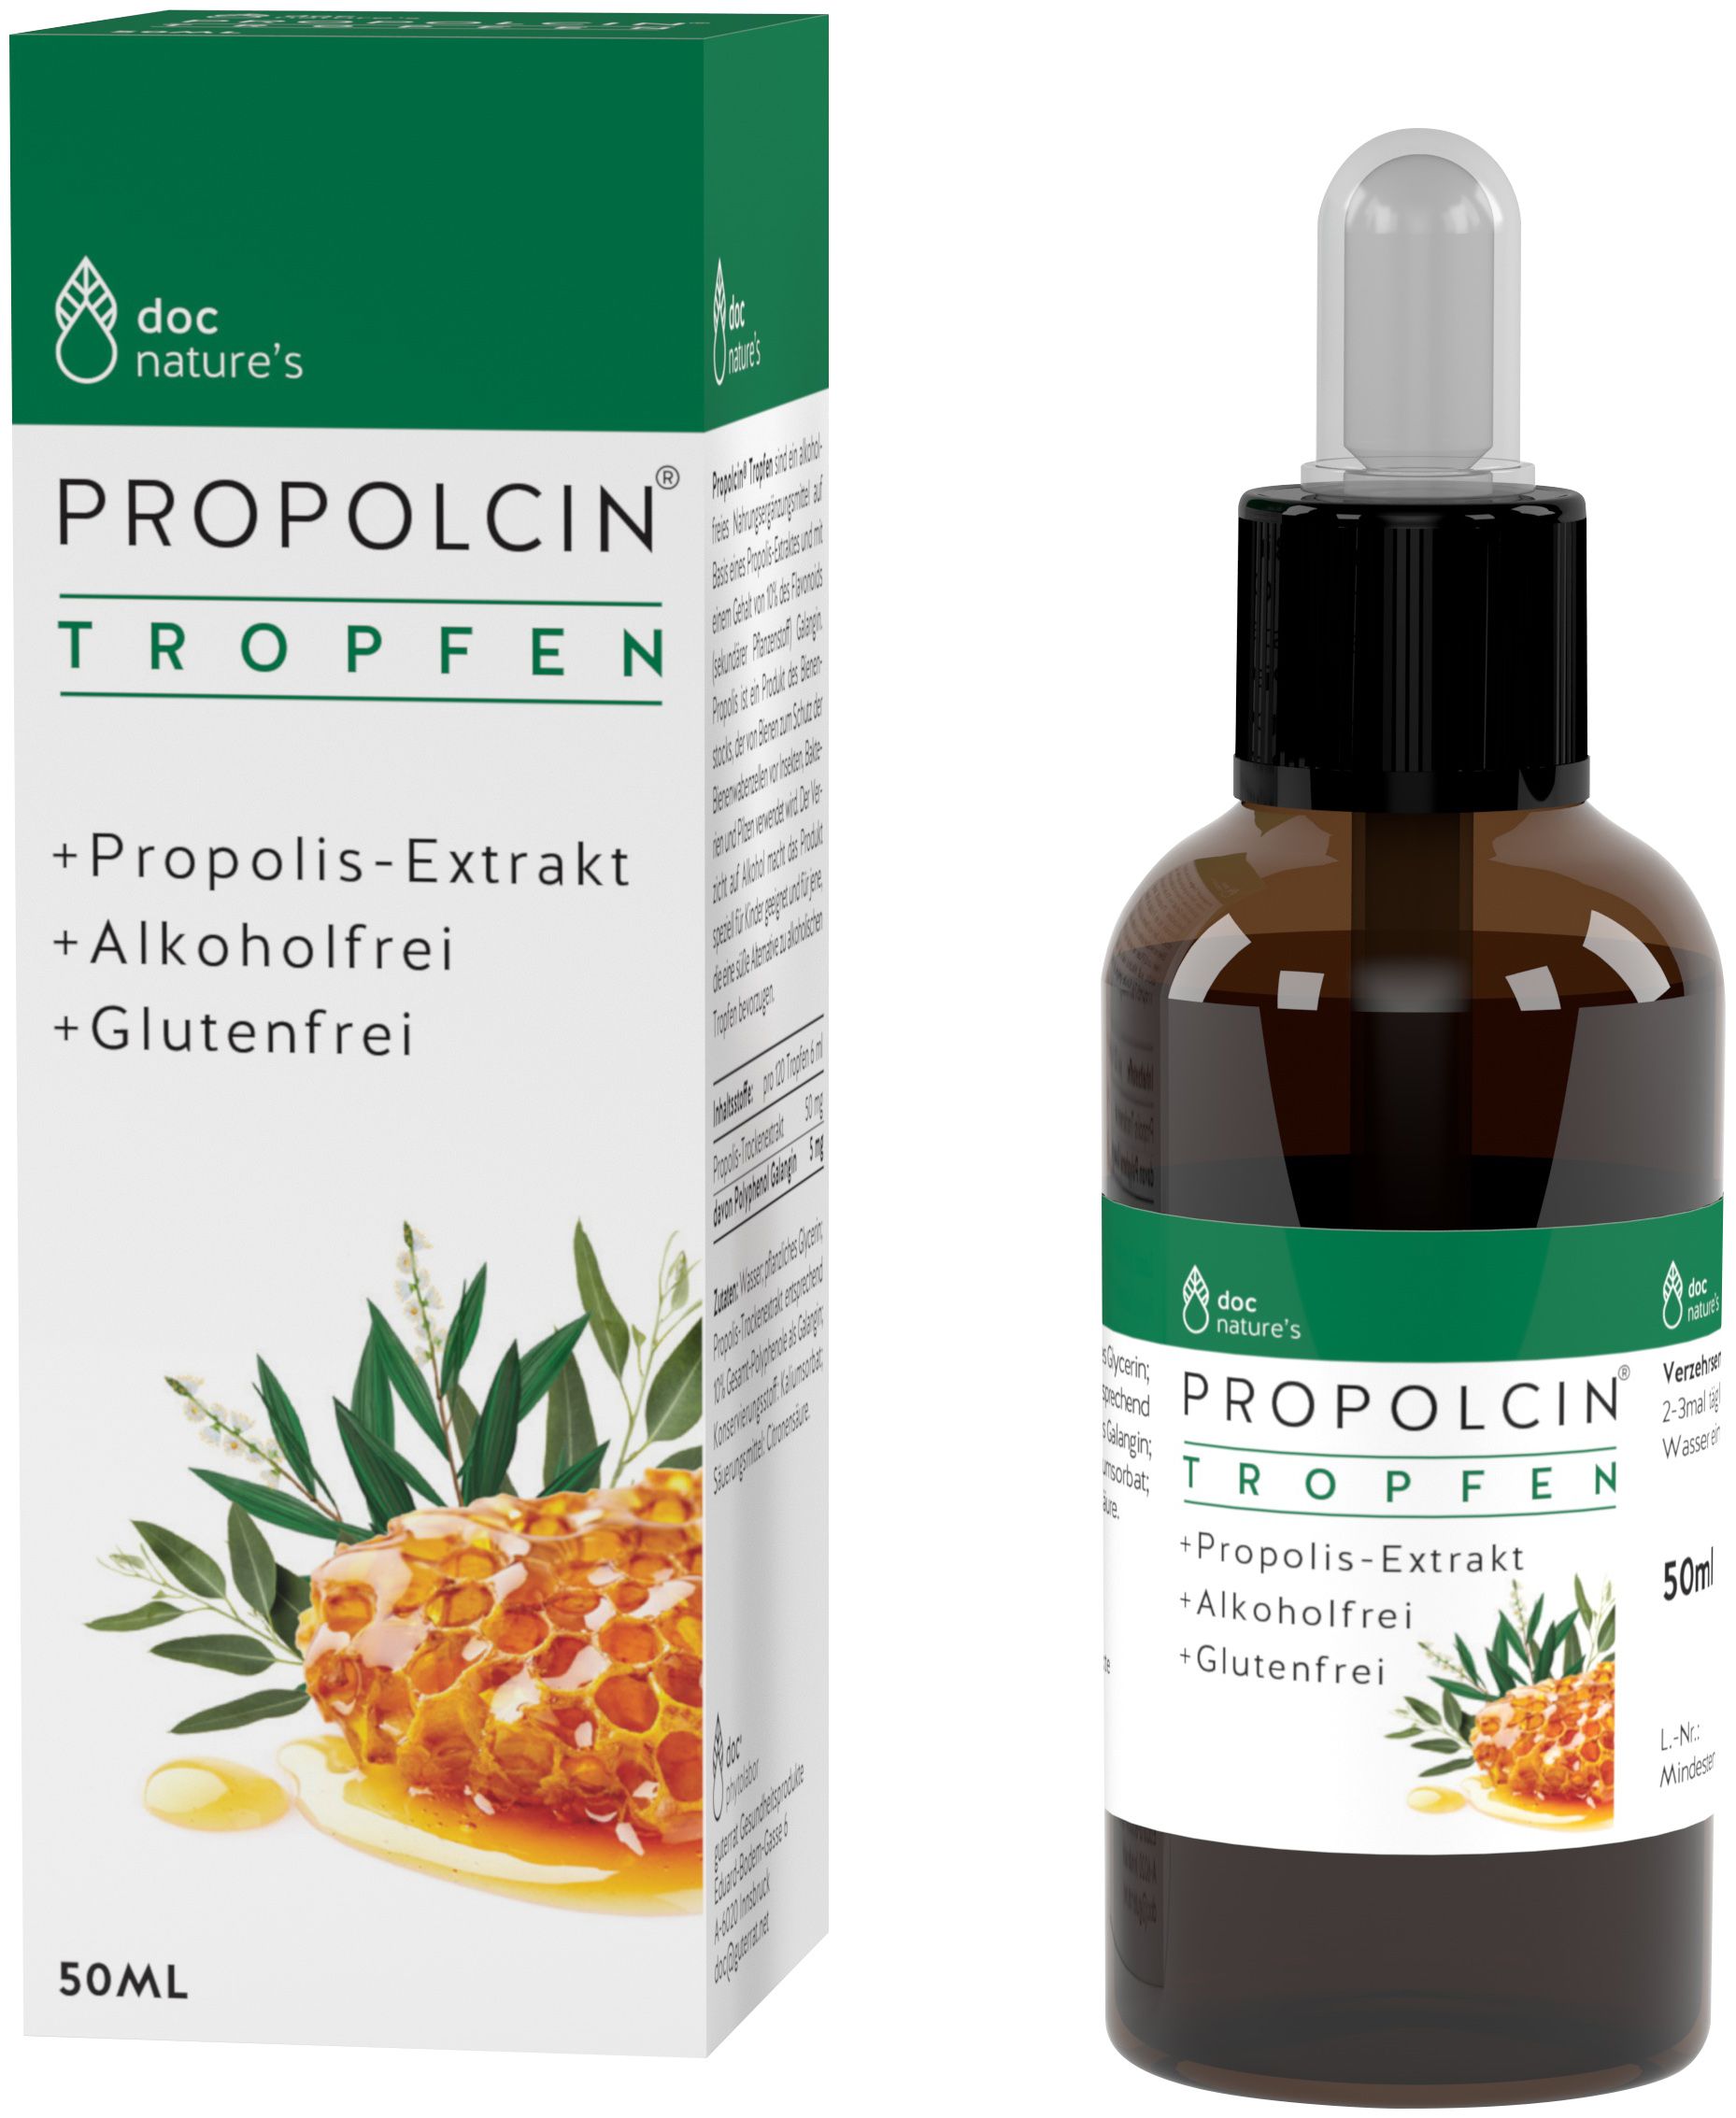 doc nature's  Propolcin® Tropfen